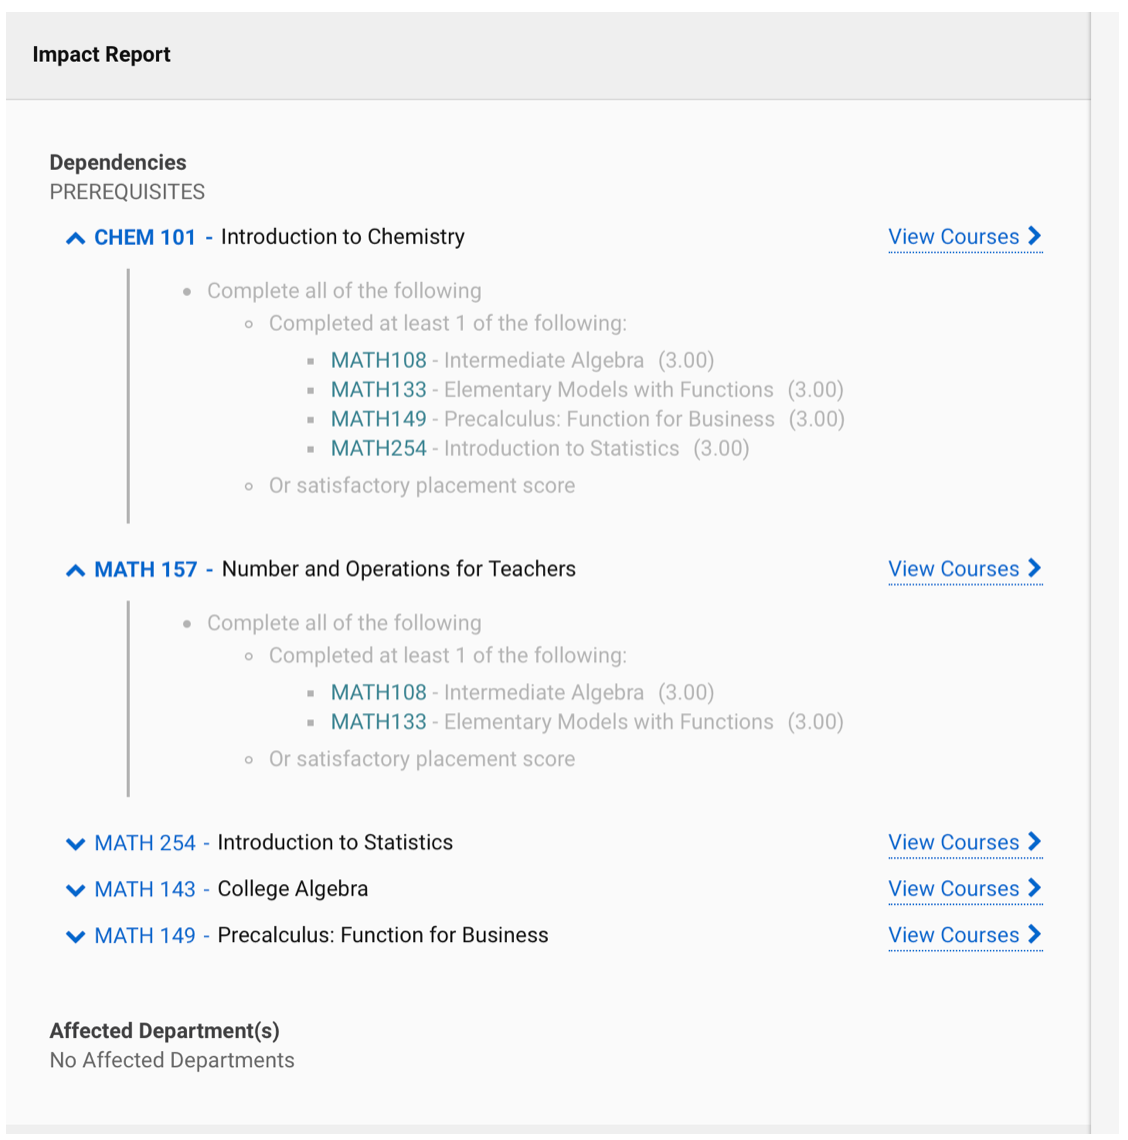 screenshot of impact report showing dependencies including math classes